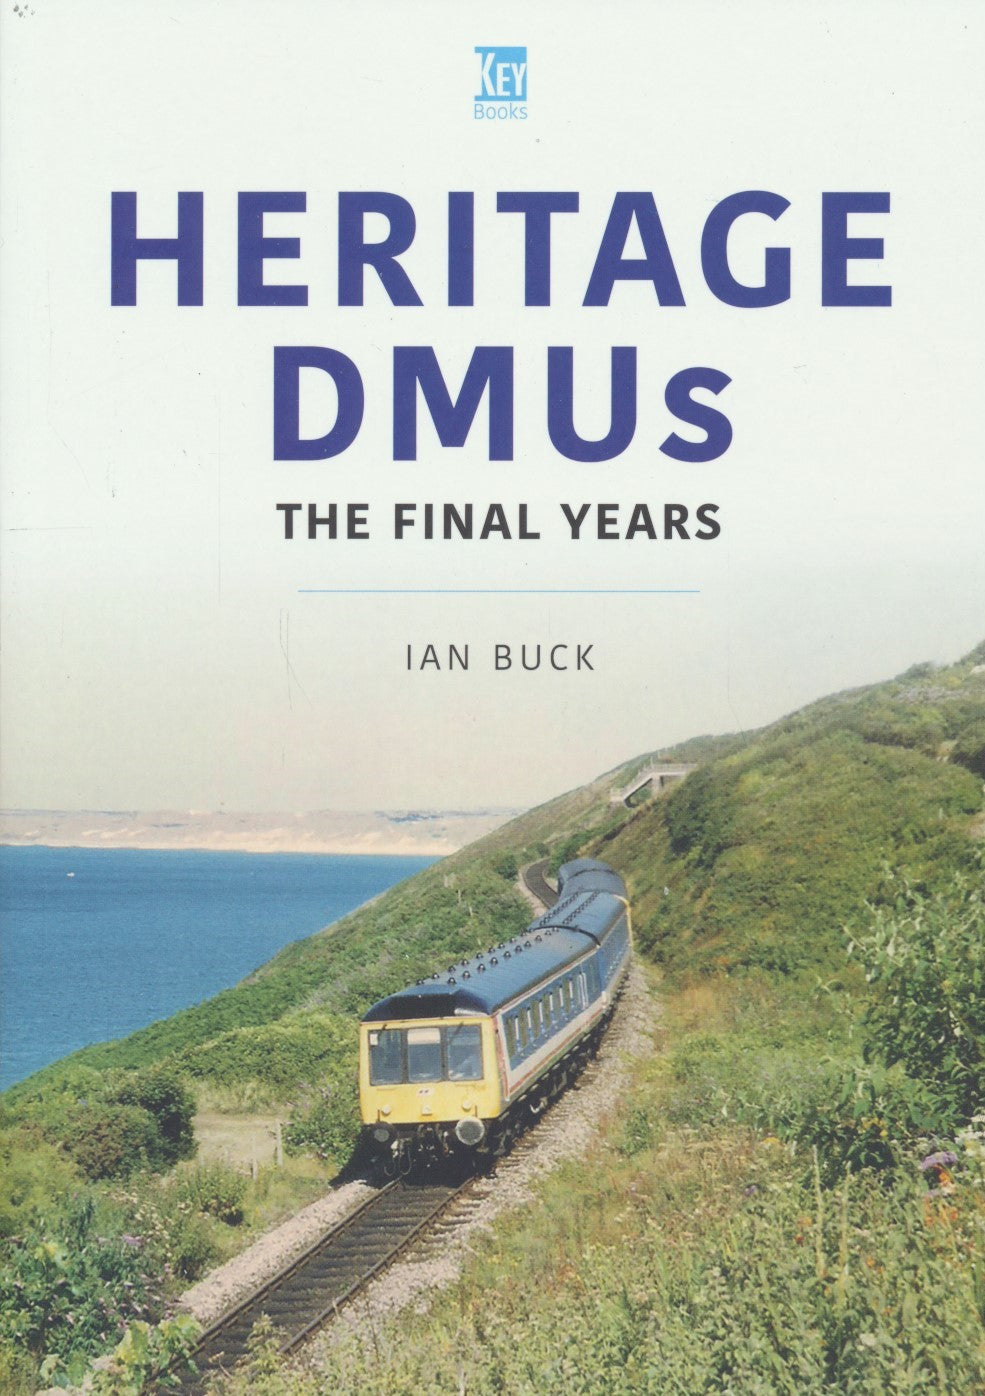 Britain's Railways Series, Volume 49 - Heritage DMUs The Final Years